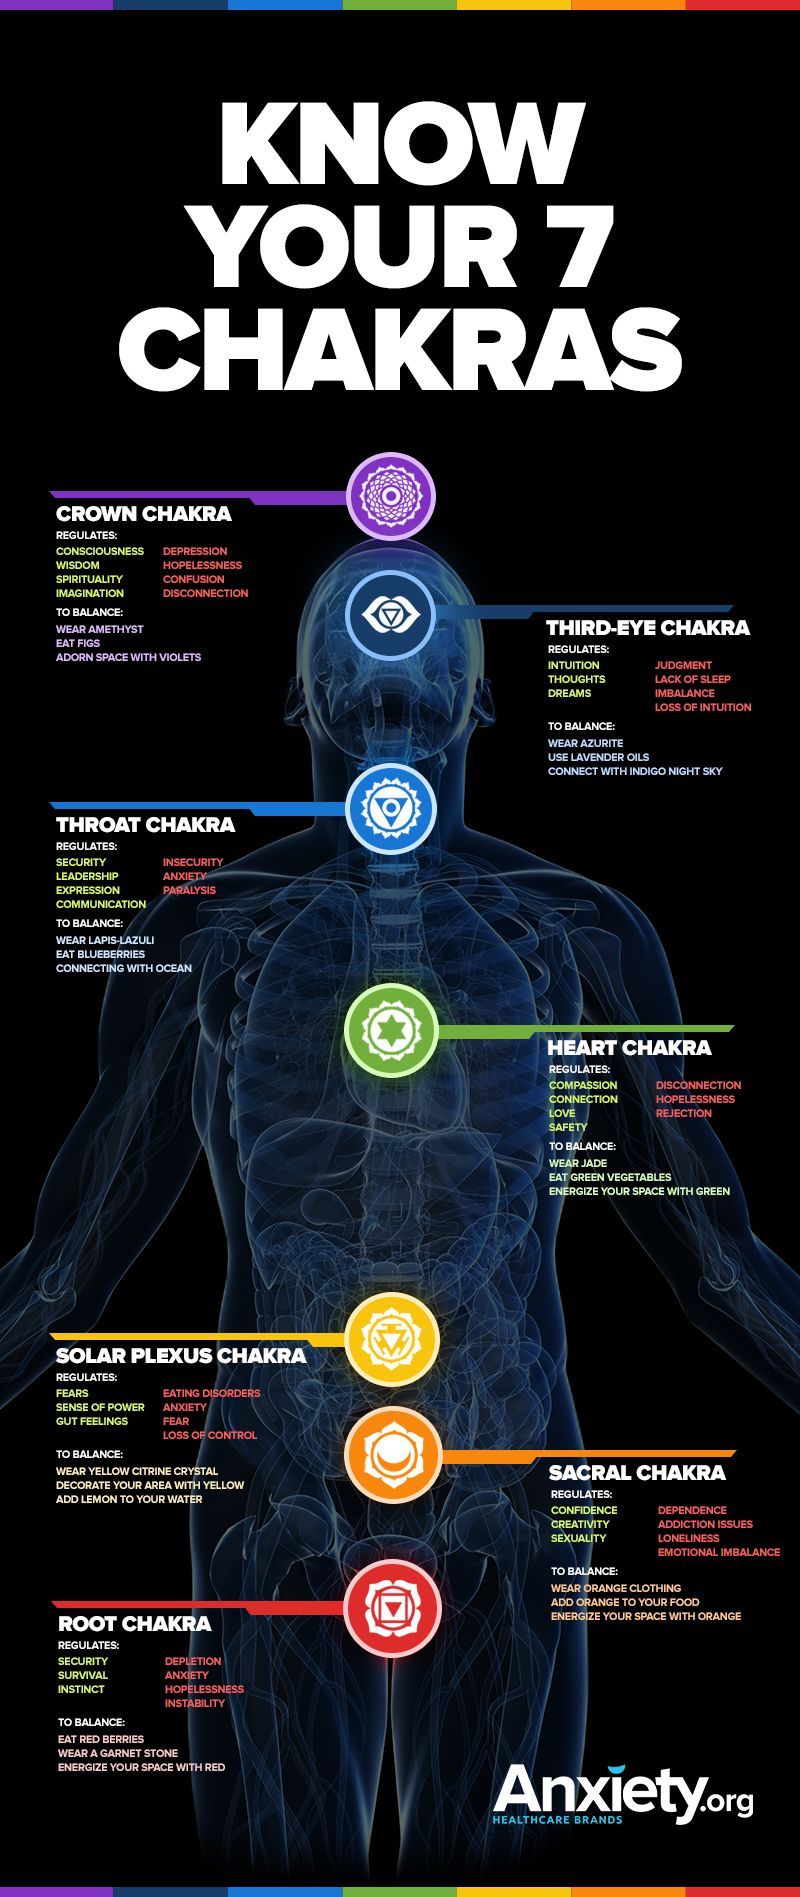 Balanced Chakras Reduce Anxiety | Chakra balancing tips infographic | Meditation | Mindfulness | Mental health & self-care